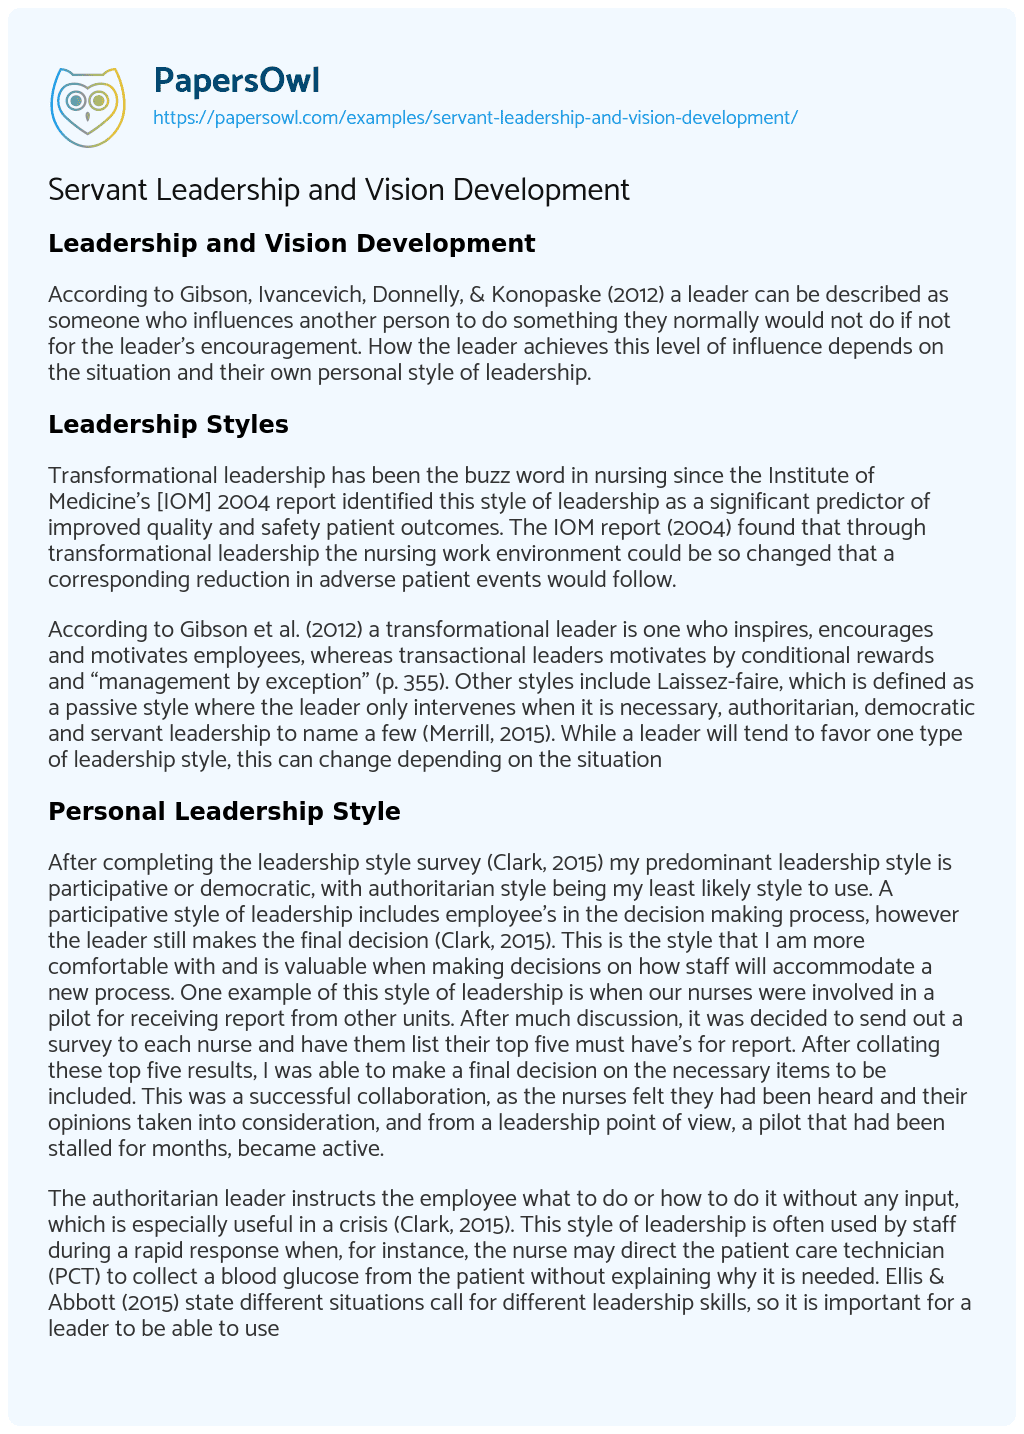 Essay on Servant Leadership and Vision Development